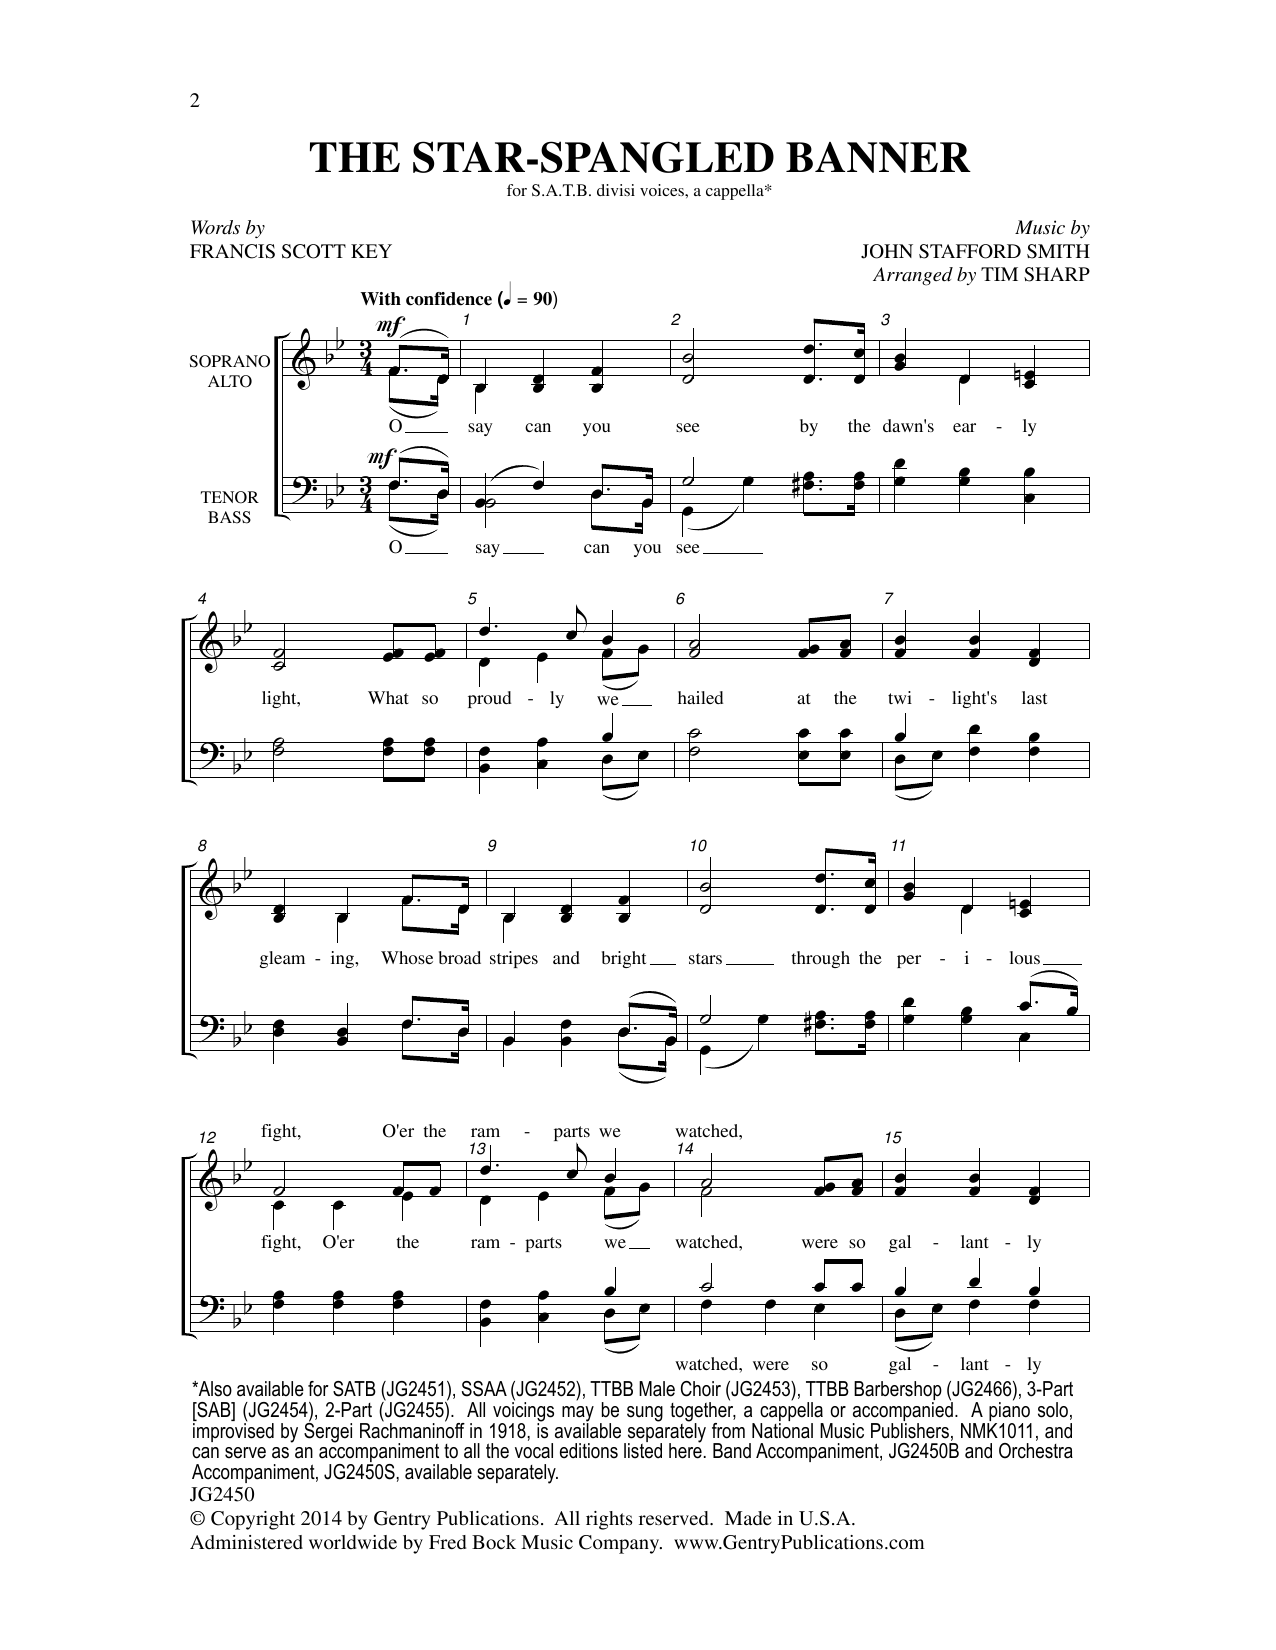 Tim Sharp The Star-Spangled Banner sheet music notes and chords arranged for TTBB Choir